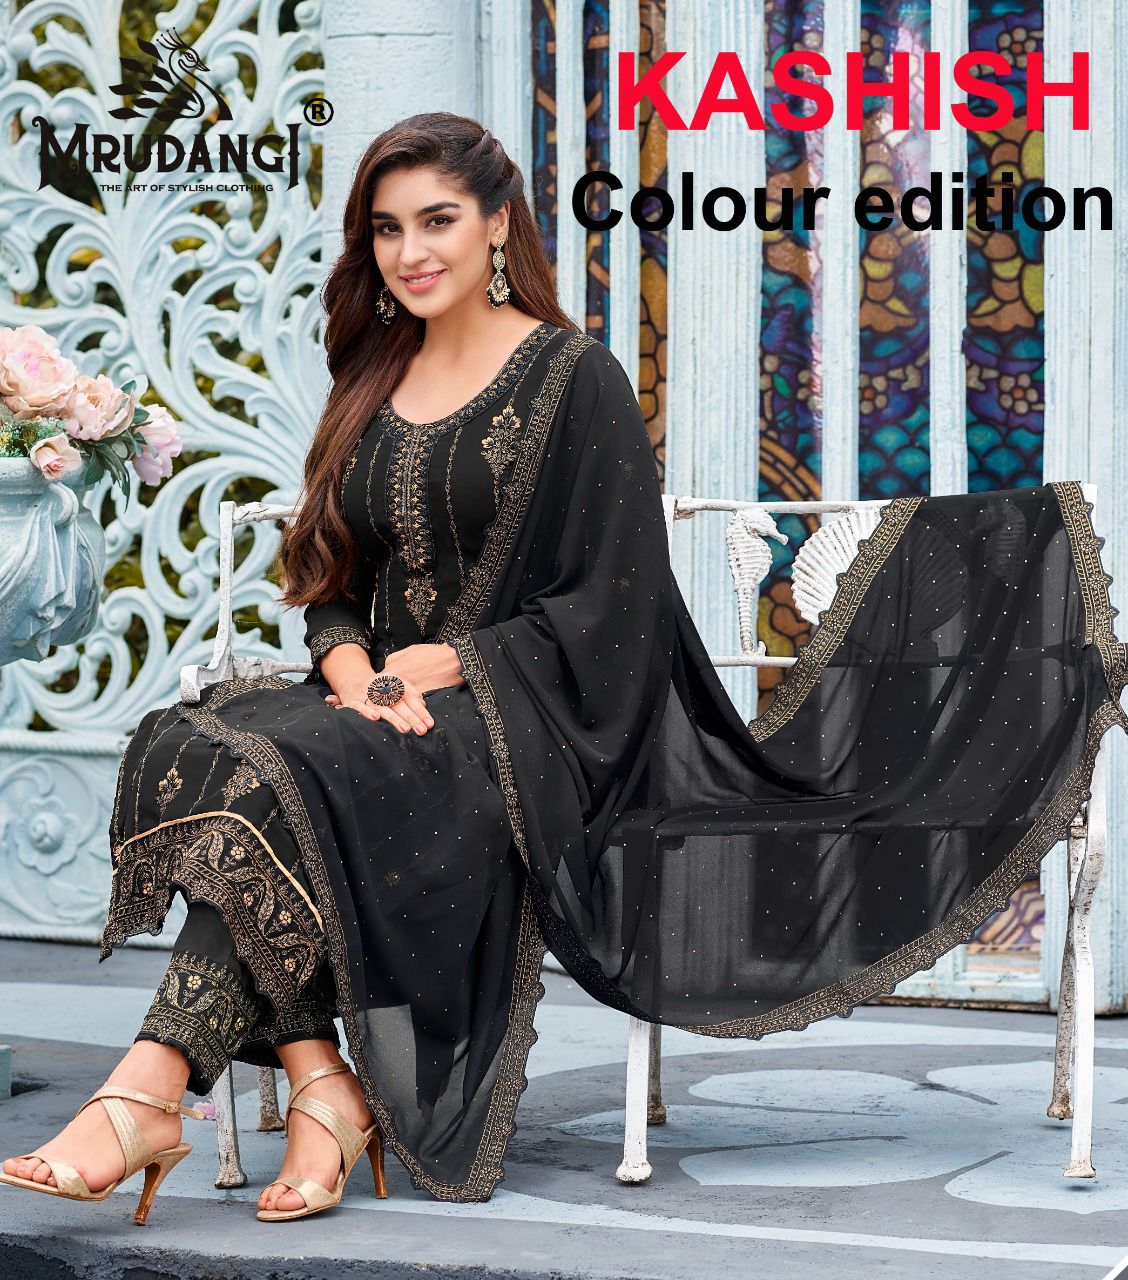 mrudangi kashish 2016 colour edition series georgette innovative look top bottom with dupatta catalog